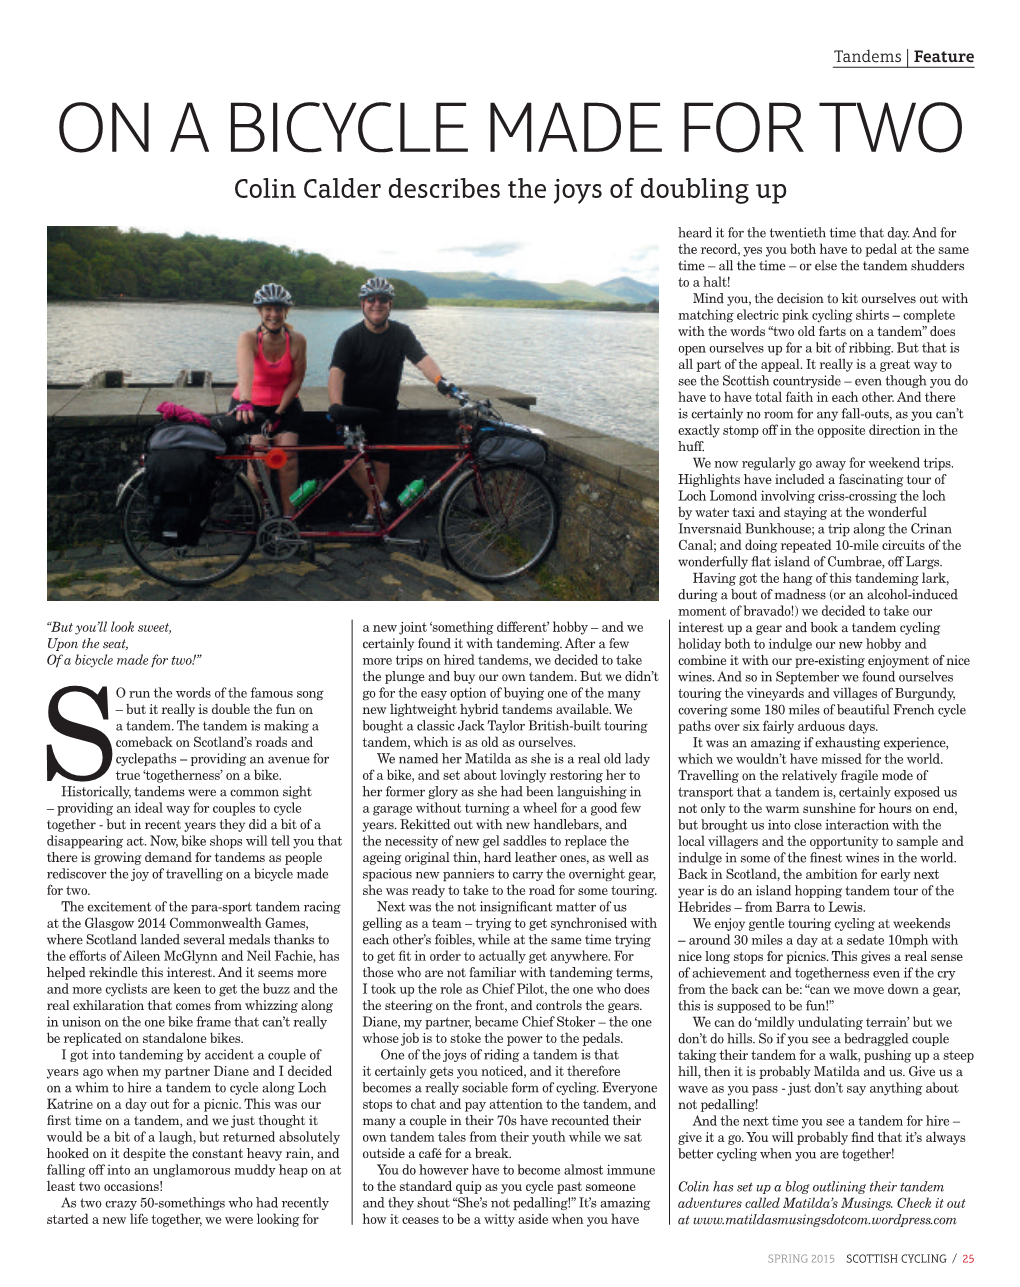 Scottish Cycling Magazine Tandem Article